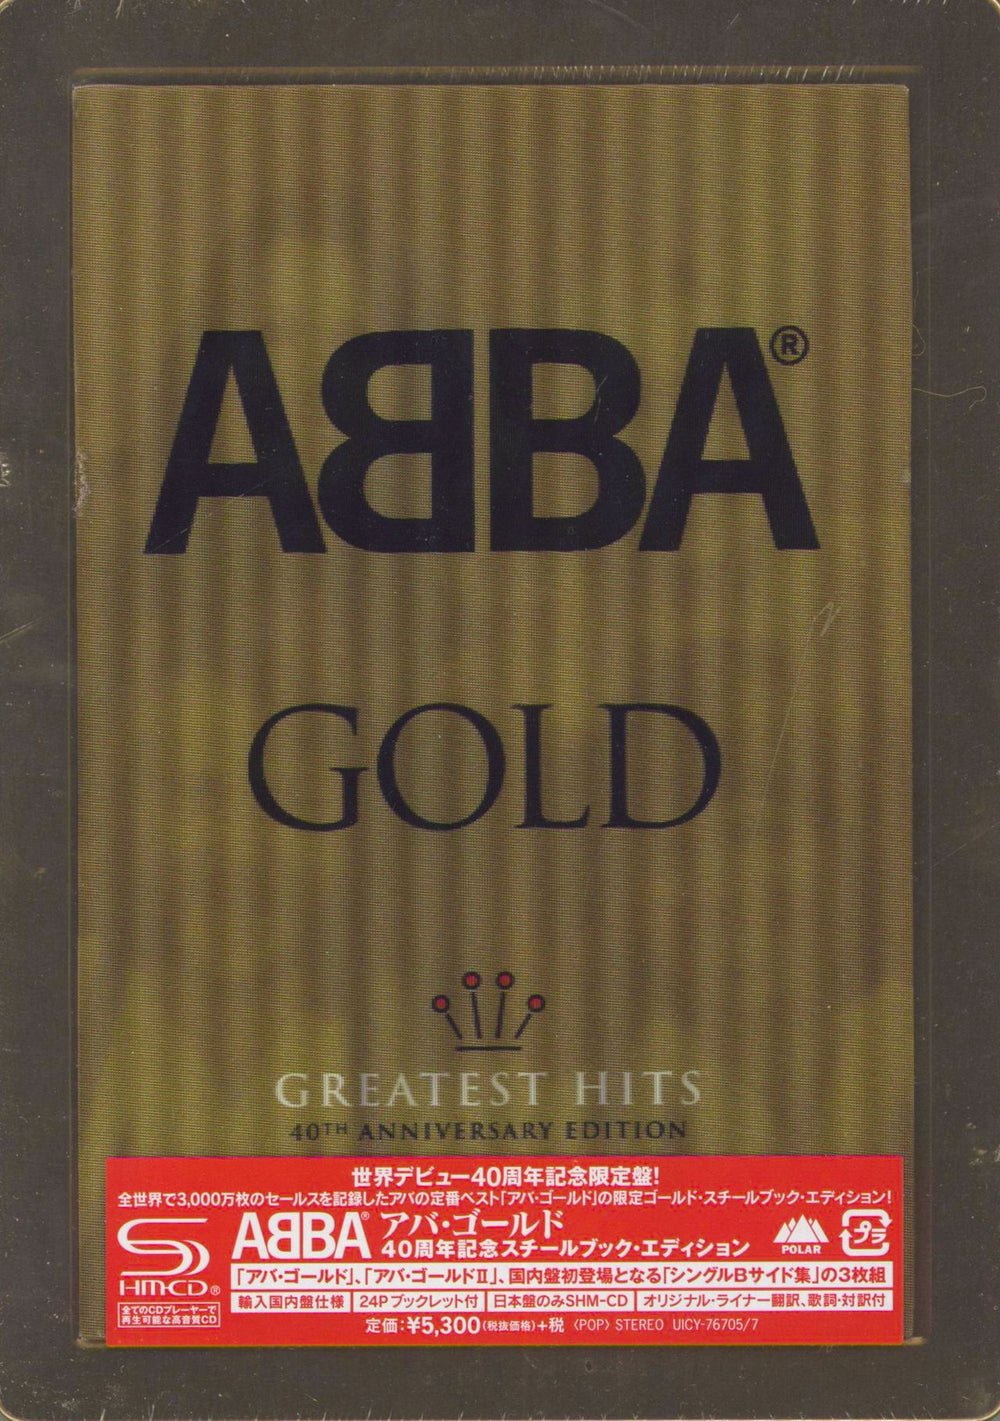 Abba Gold (Greatest Hits) - 40th Anniversary Steelbook - Sealed Japane —  RareVinyl.com